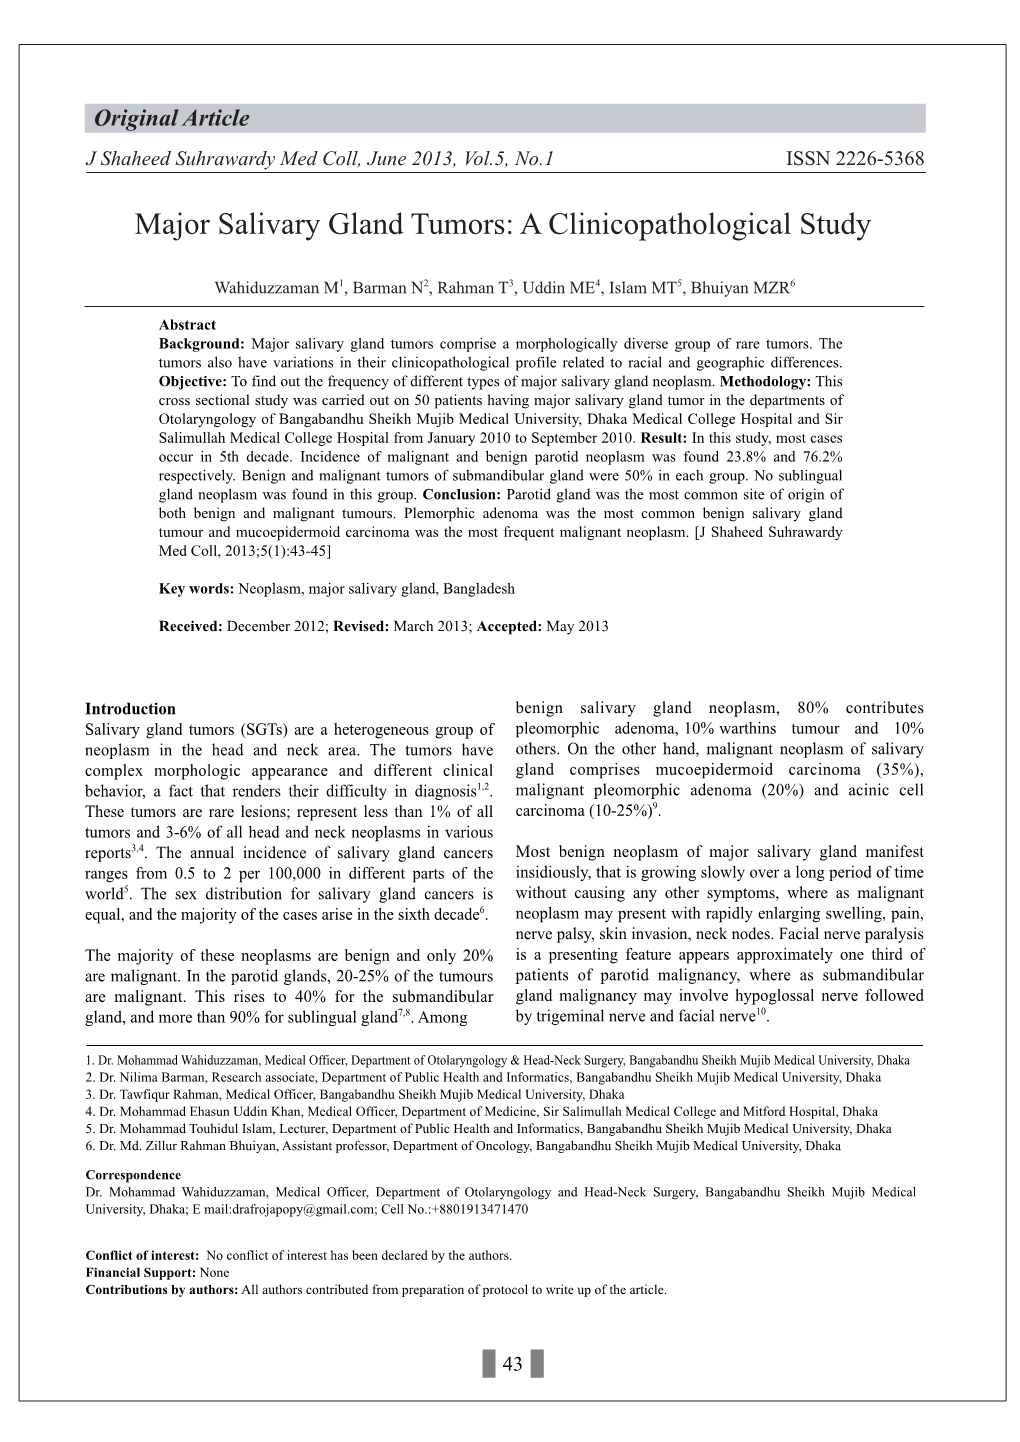 Major Salivary Gland Tumors: a Clinicopathological Study